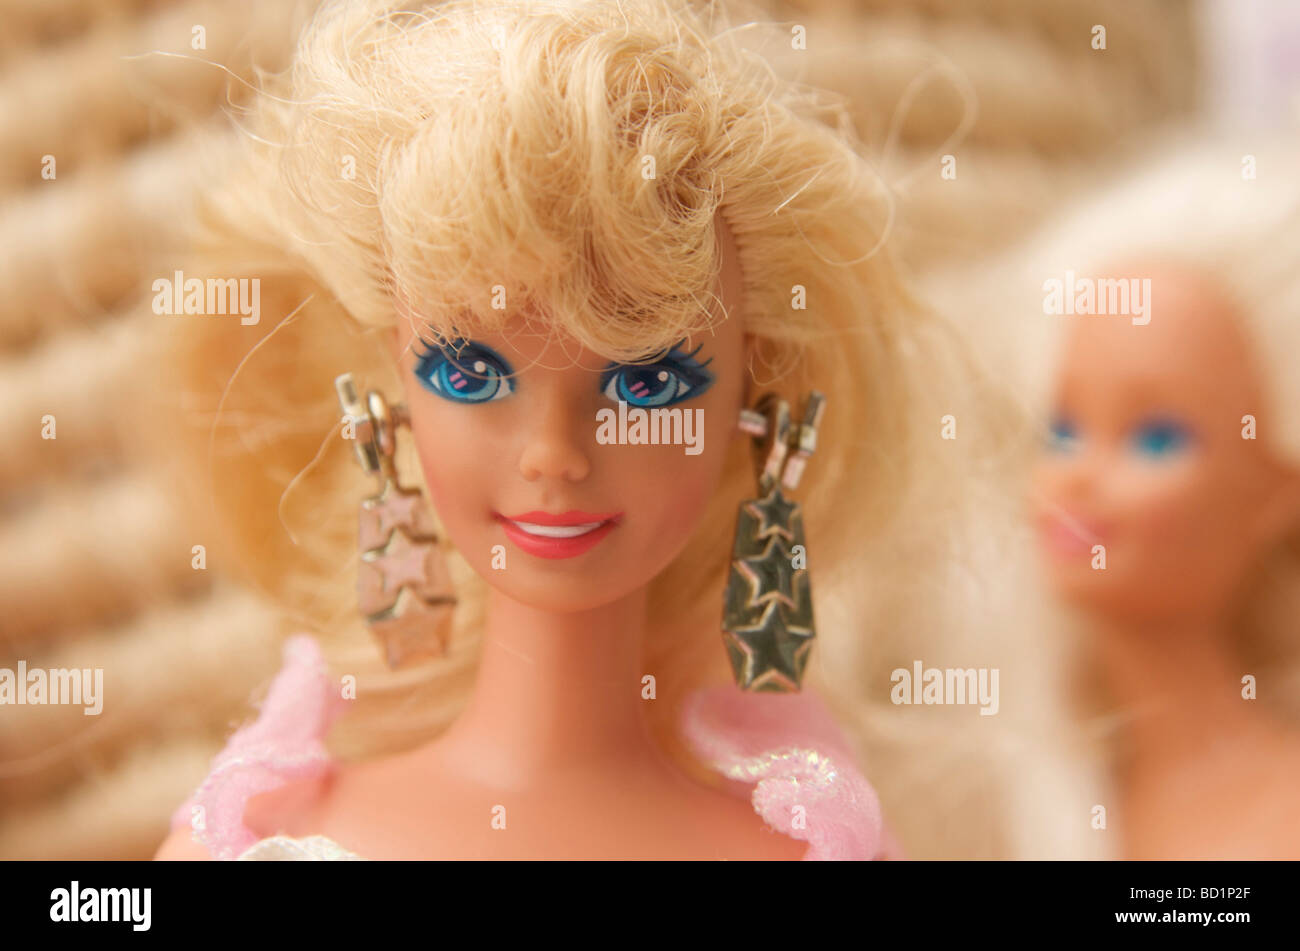 Barbie doll Stock Photo